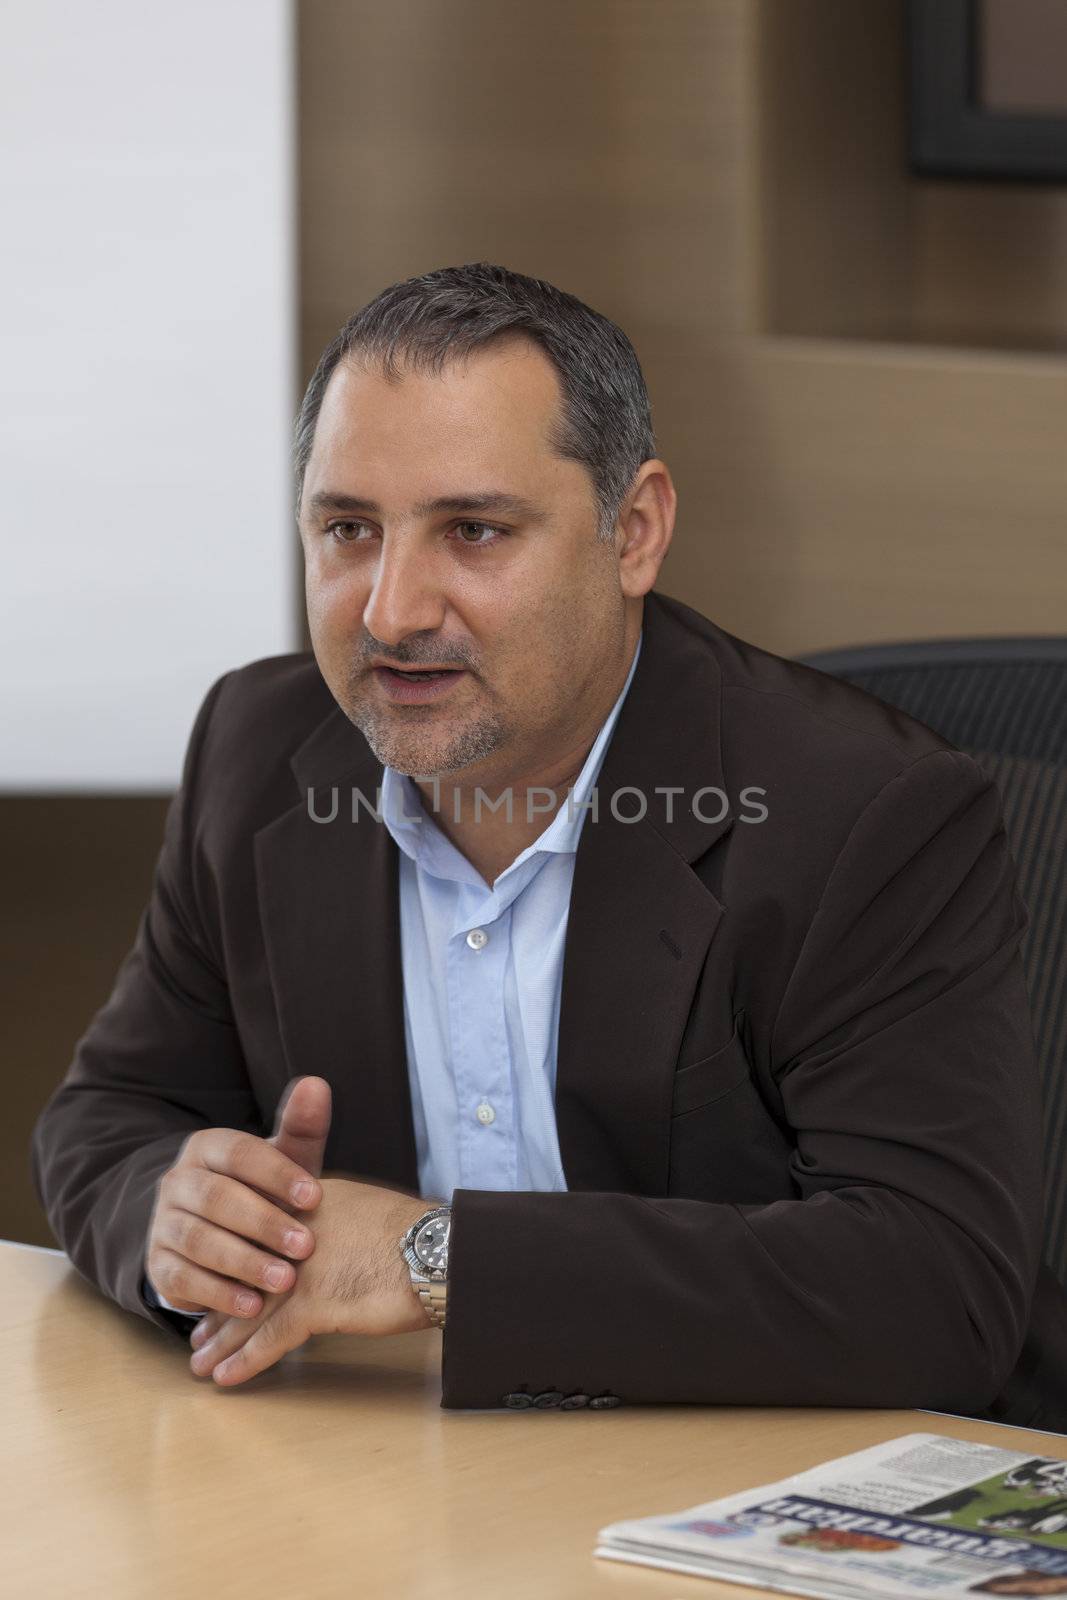 Smart City Malta CEO by PhotoWorks